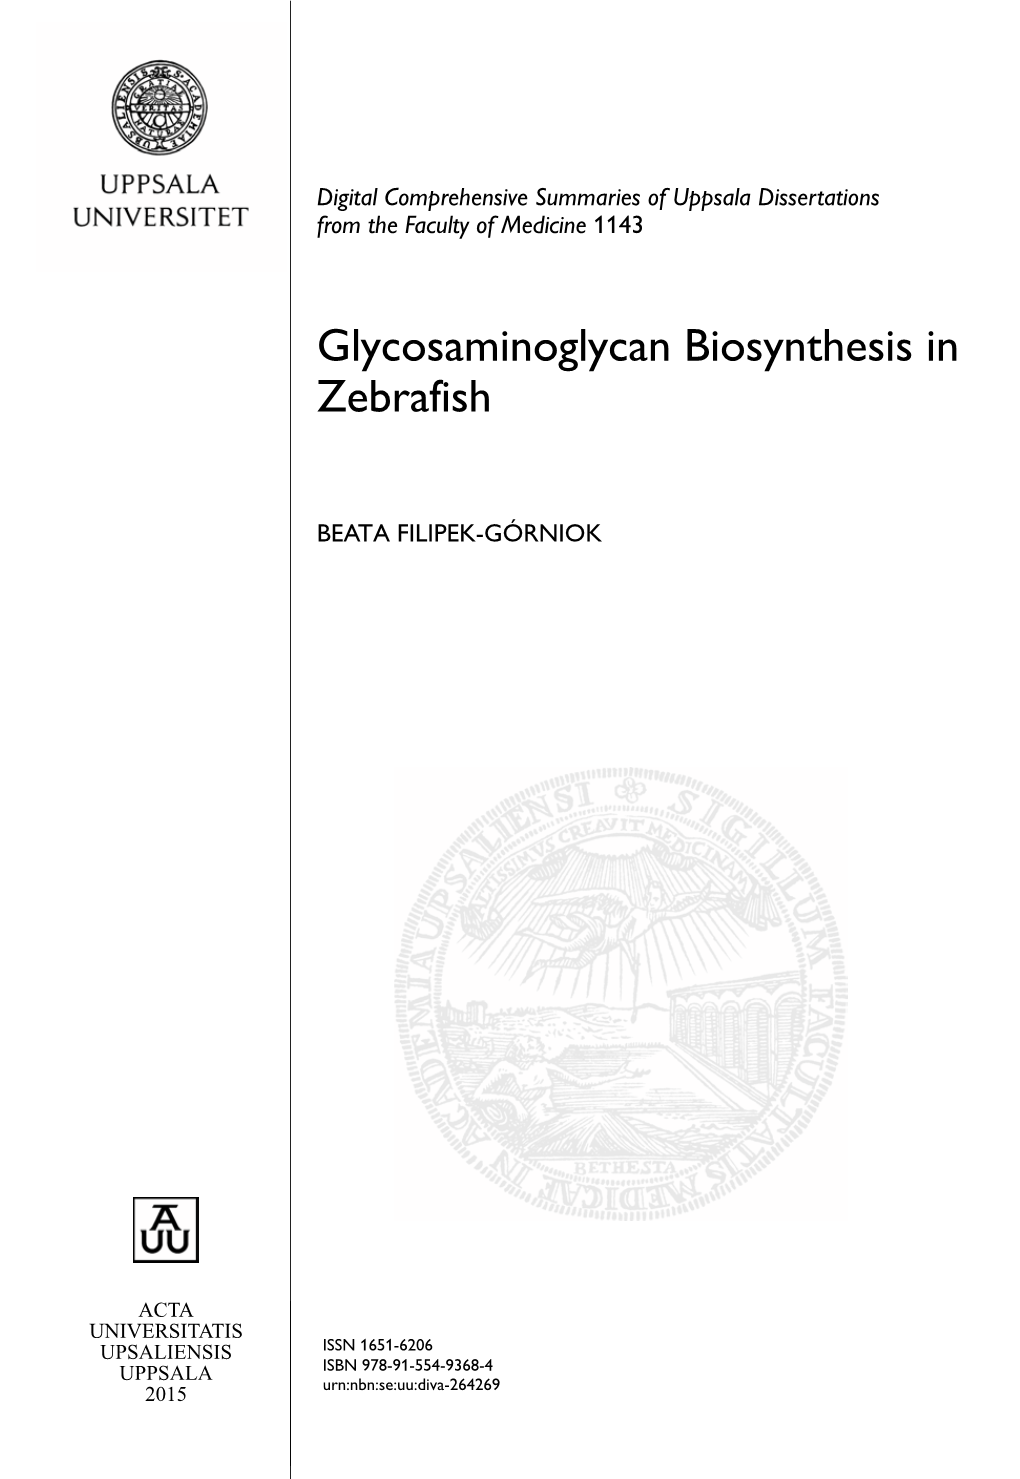 Glycosaminoglycan Biosynthesis in Zebrafish